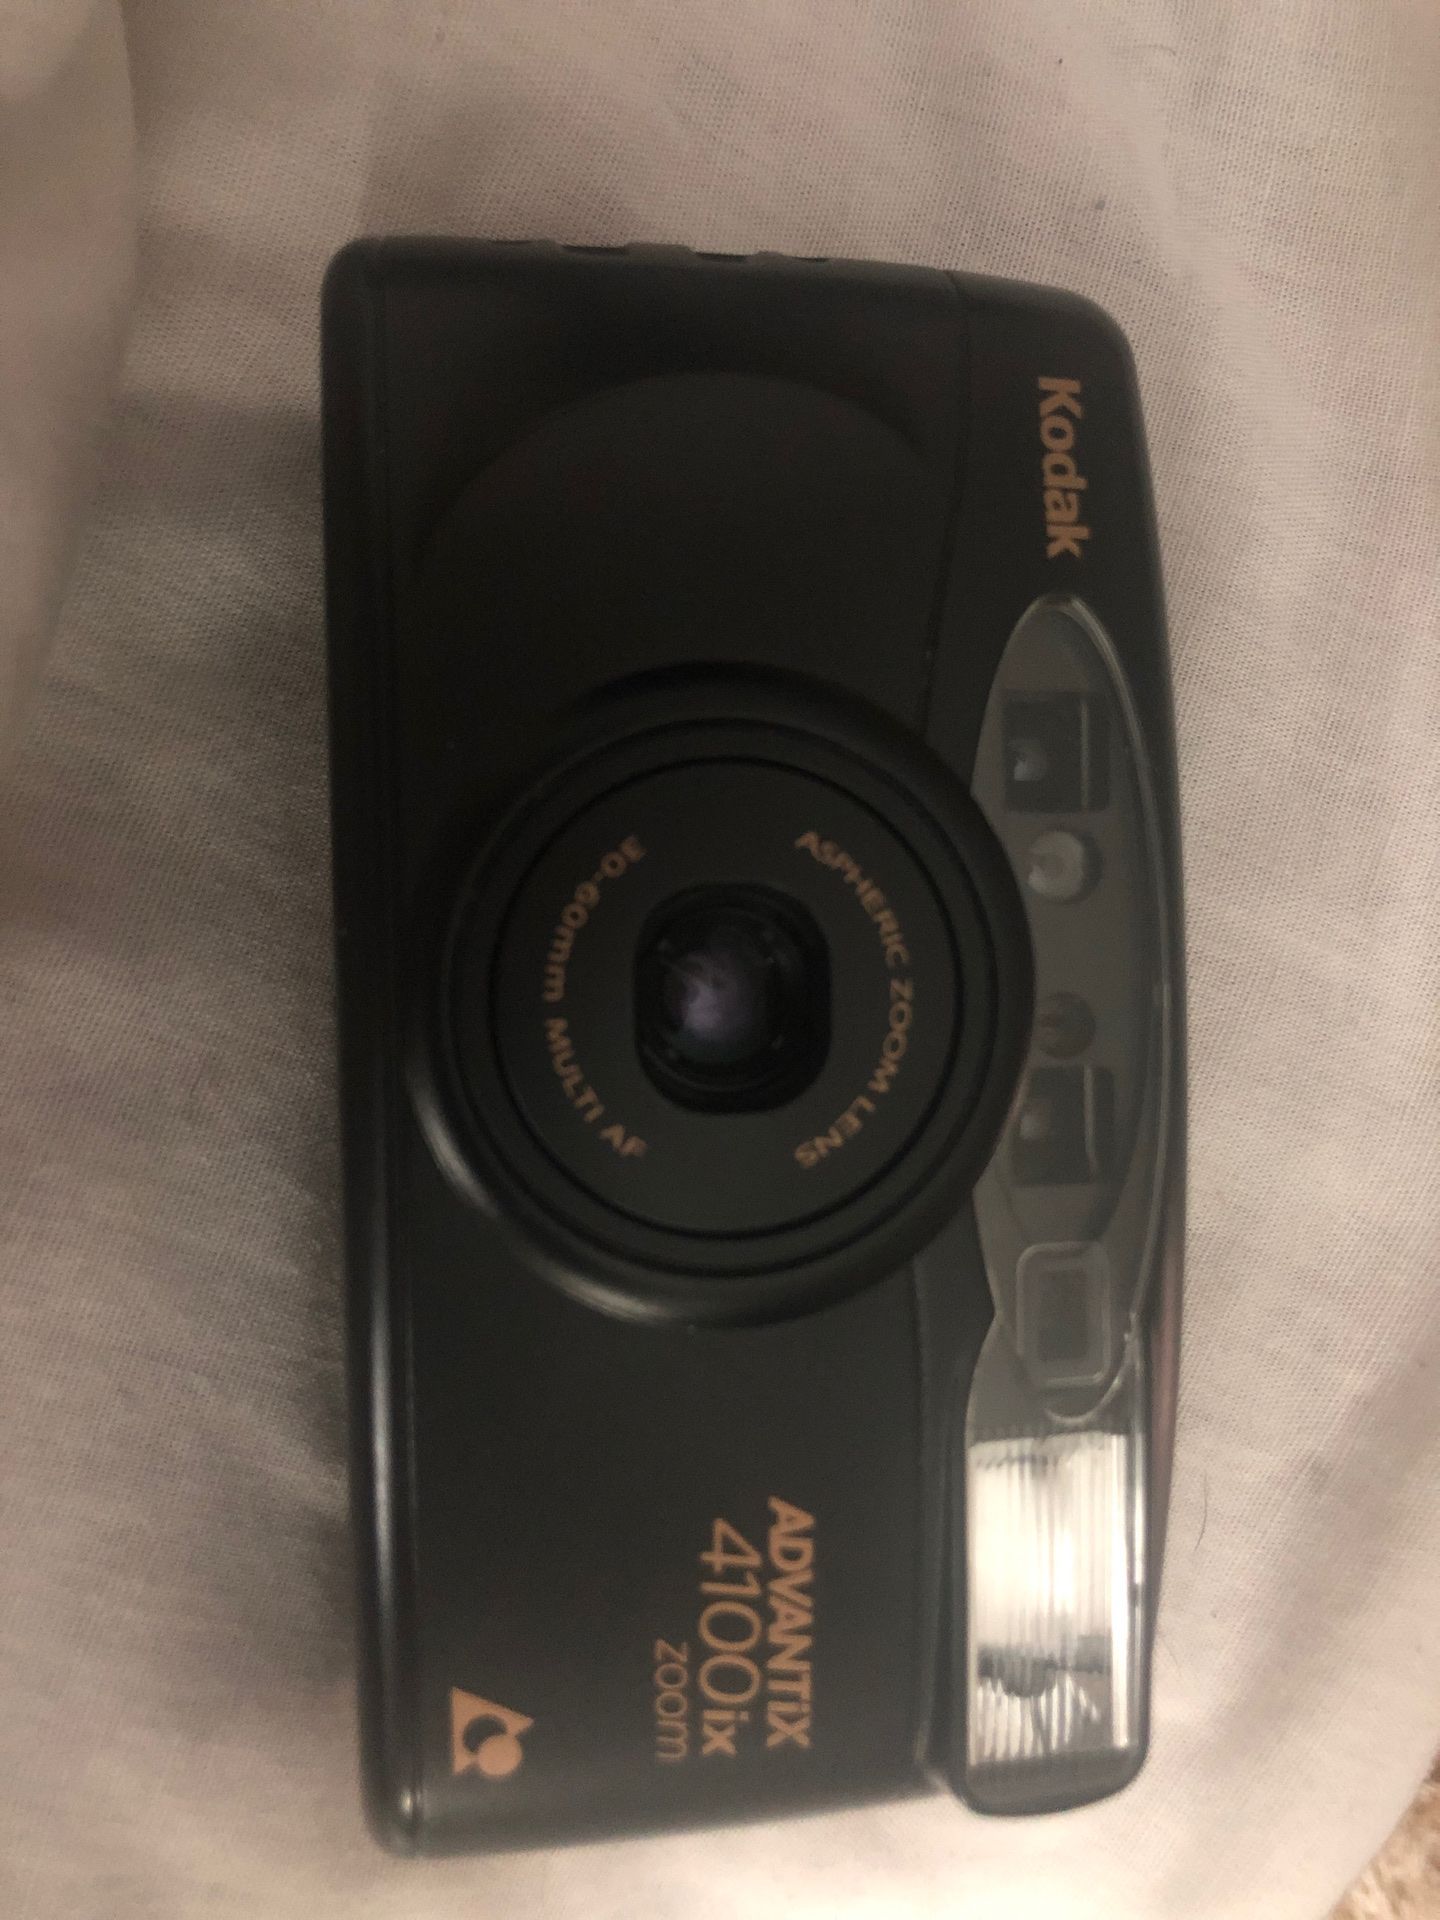 Kodak 4100ix zoom Advantix Camera with panoramic shot capabilities